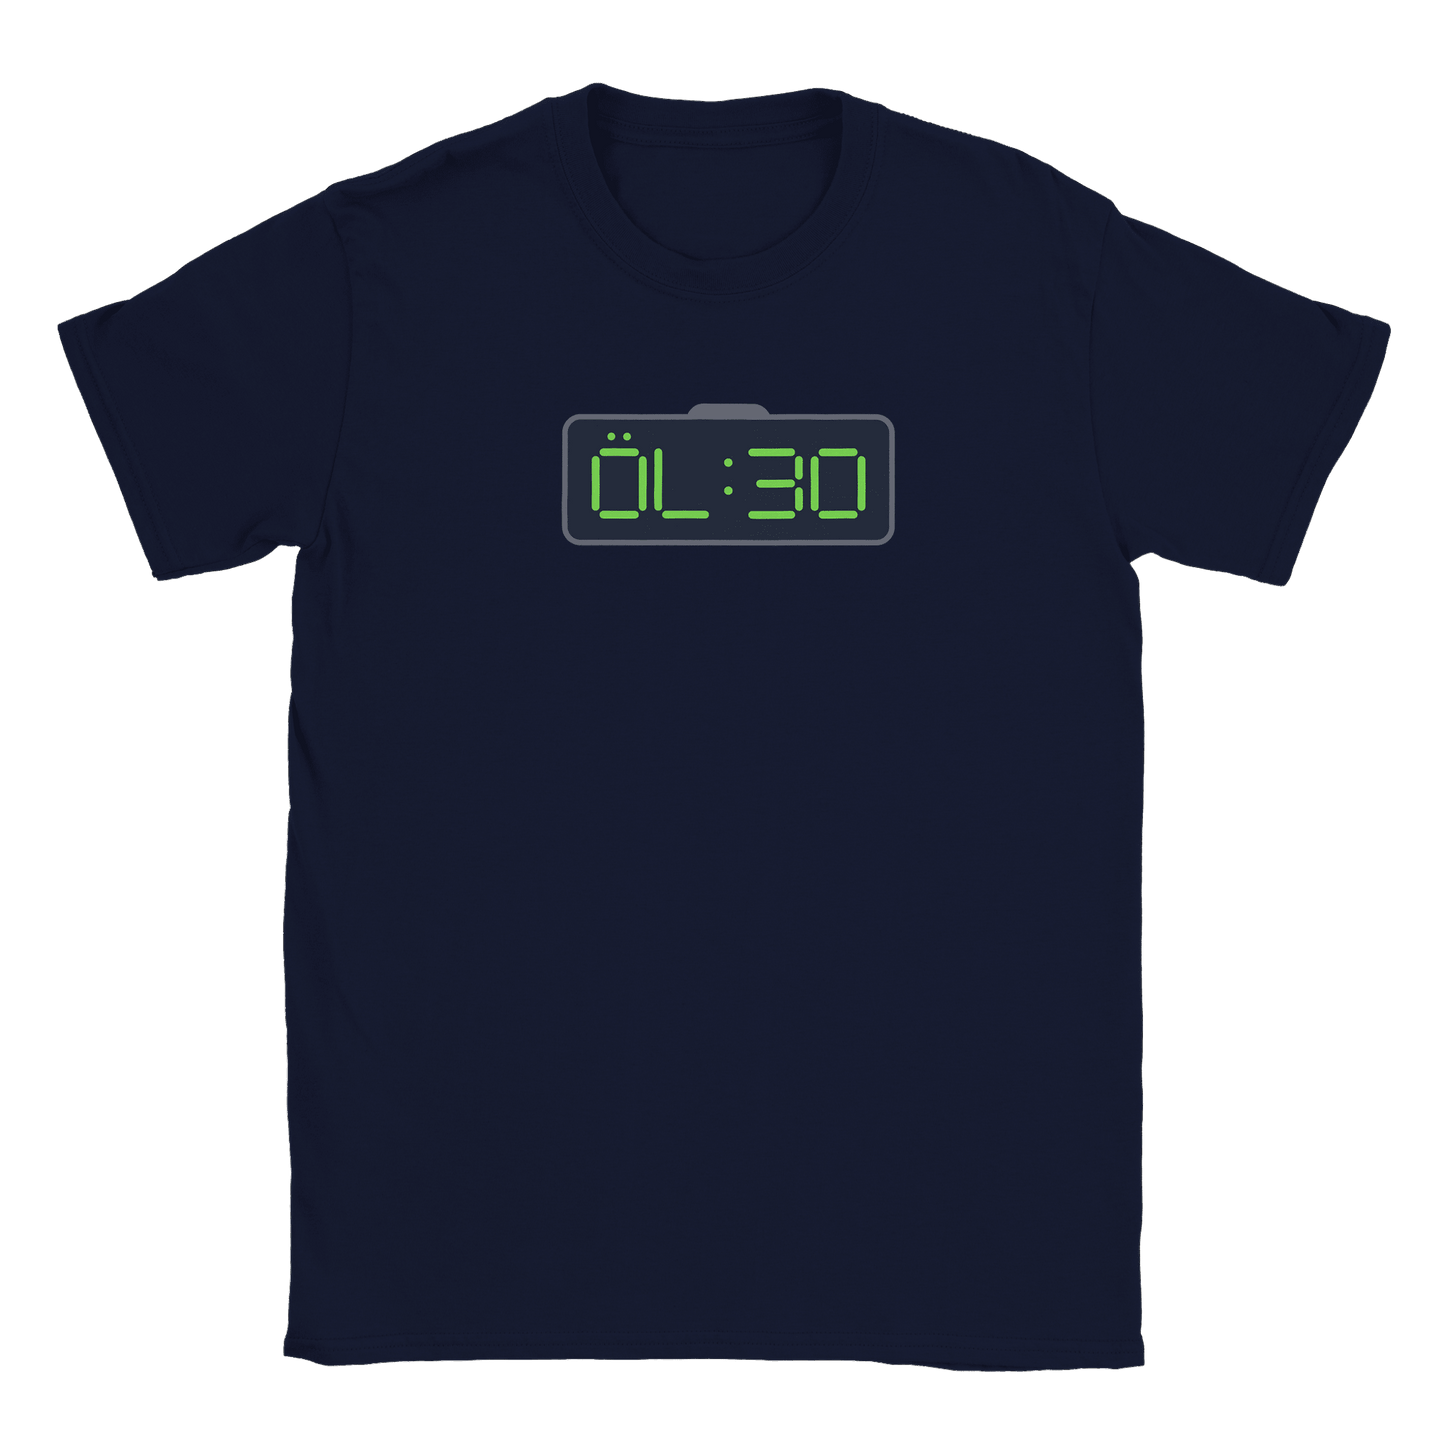 ÖL 30 - T-shirt Navy